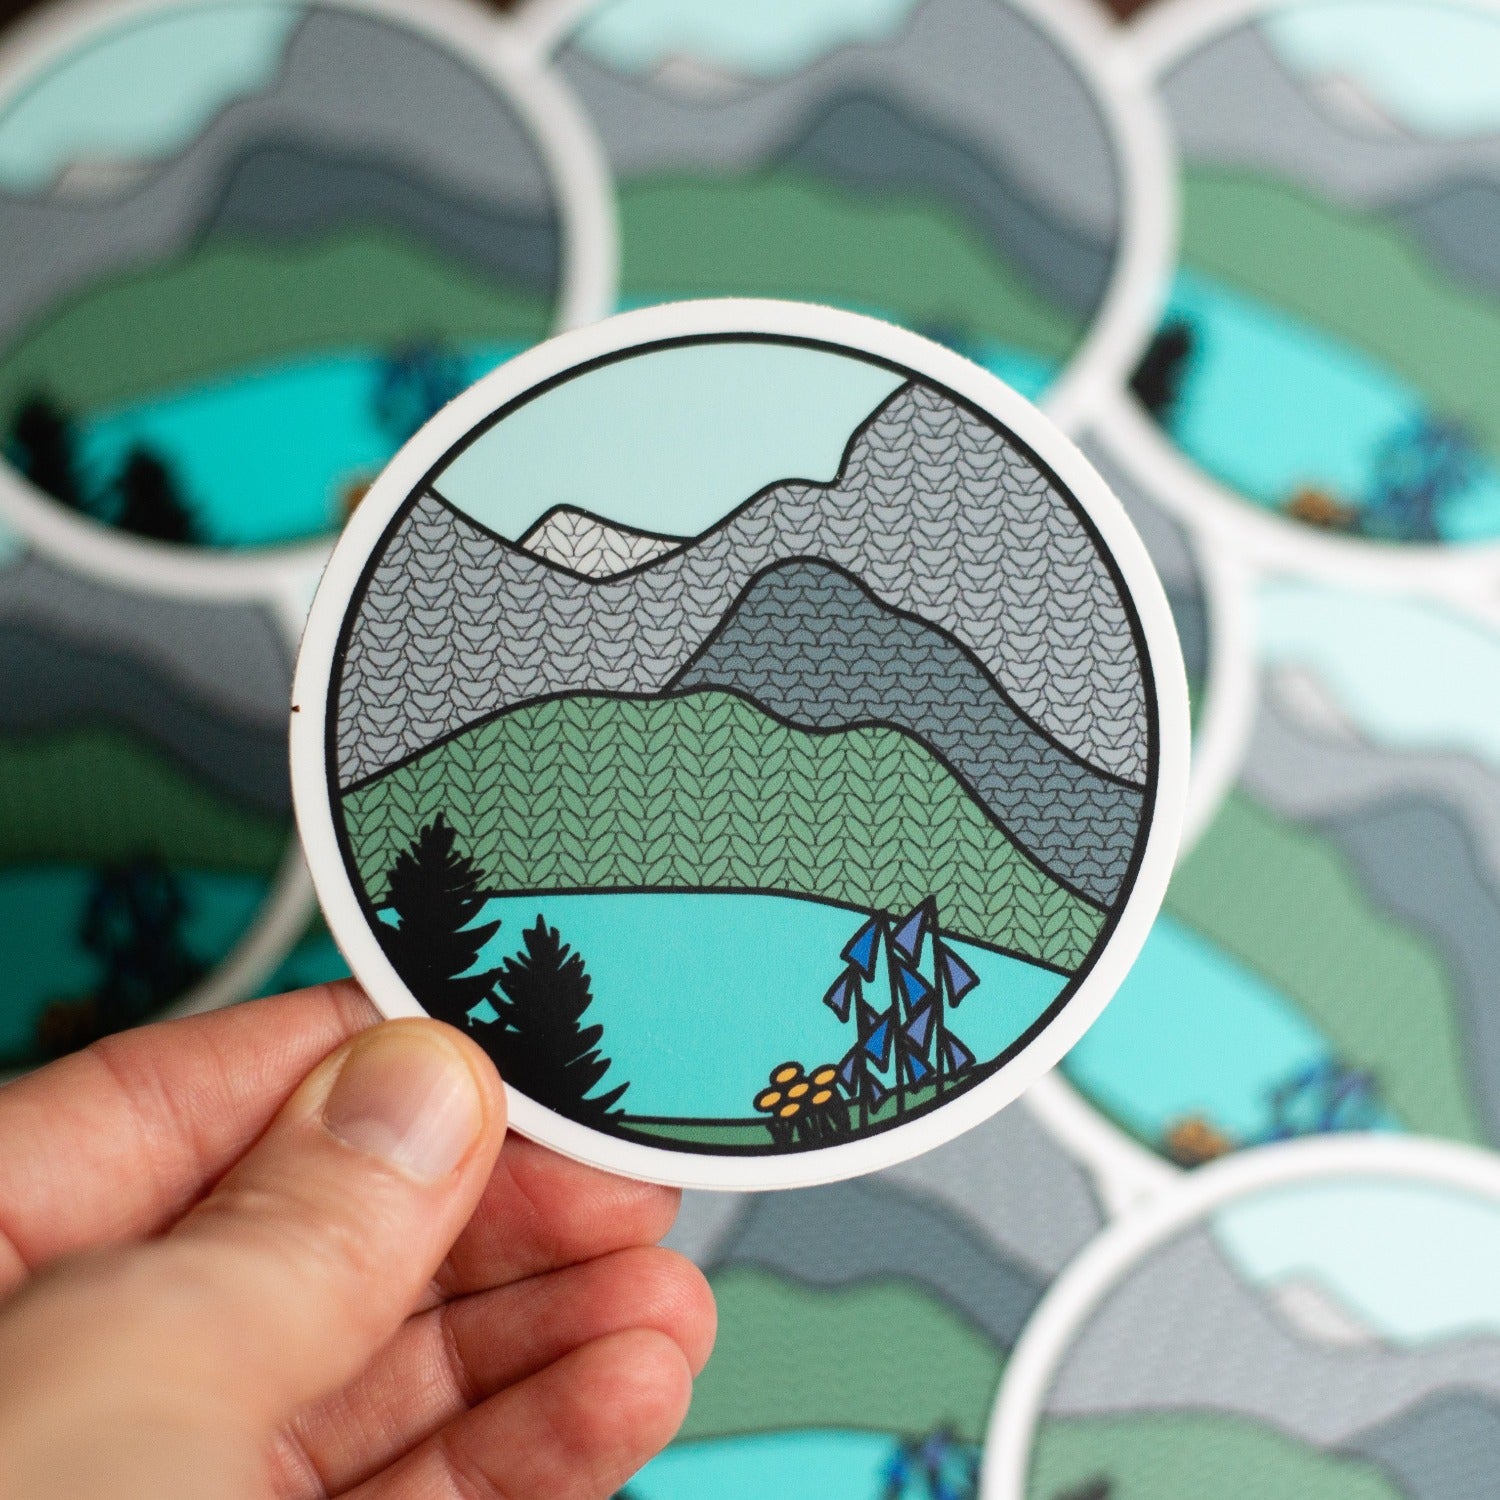 Glacier Knitional Park - National Park Knitting Sticker